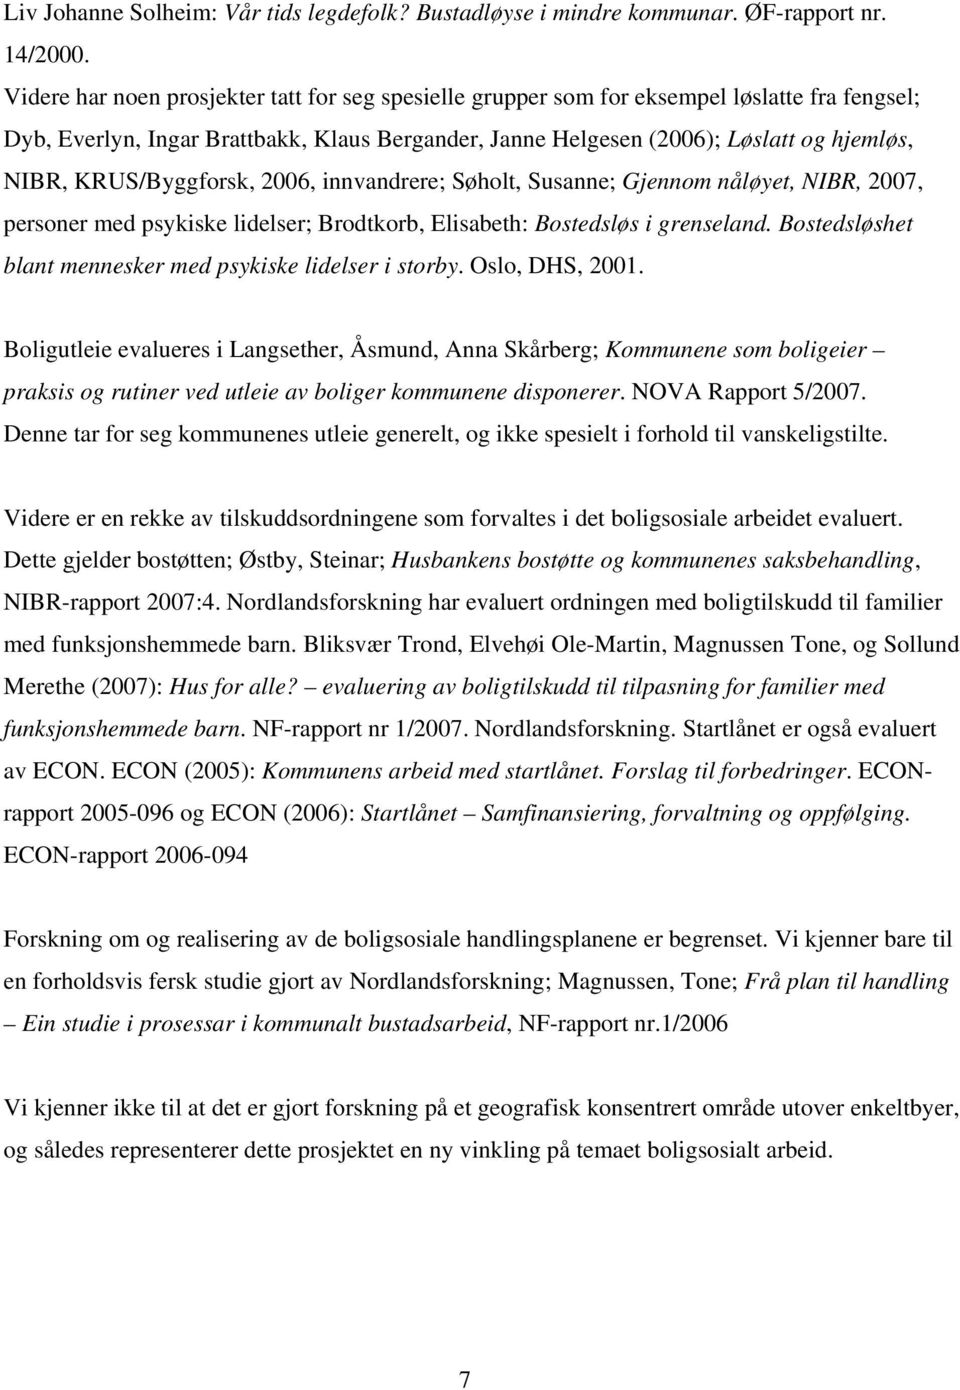 KRUS/Byggforsk, 2006, innvandrere; Søholt, Susanne; Gjennom nåløyet, NIBR, 2007, personer med psykiske lidelser; Brodtkorb, Elisabeth: Bostedsløs i grenseland.